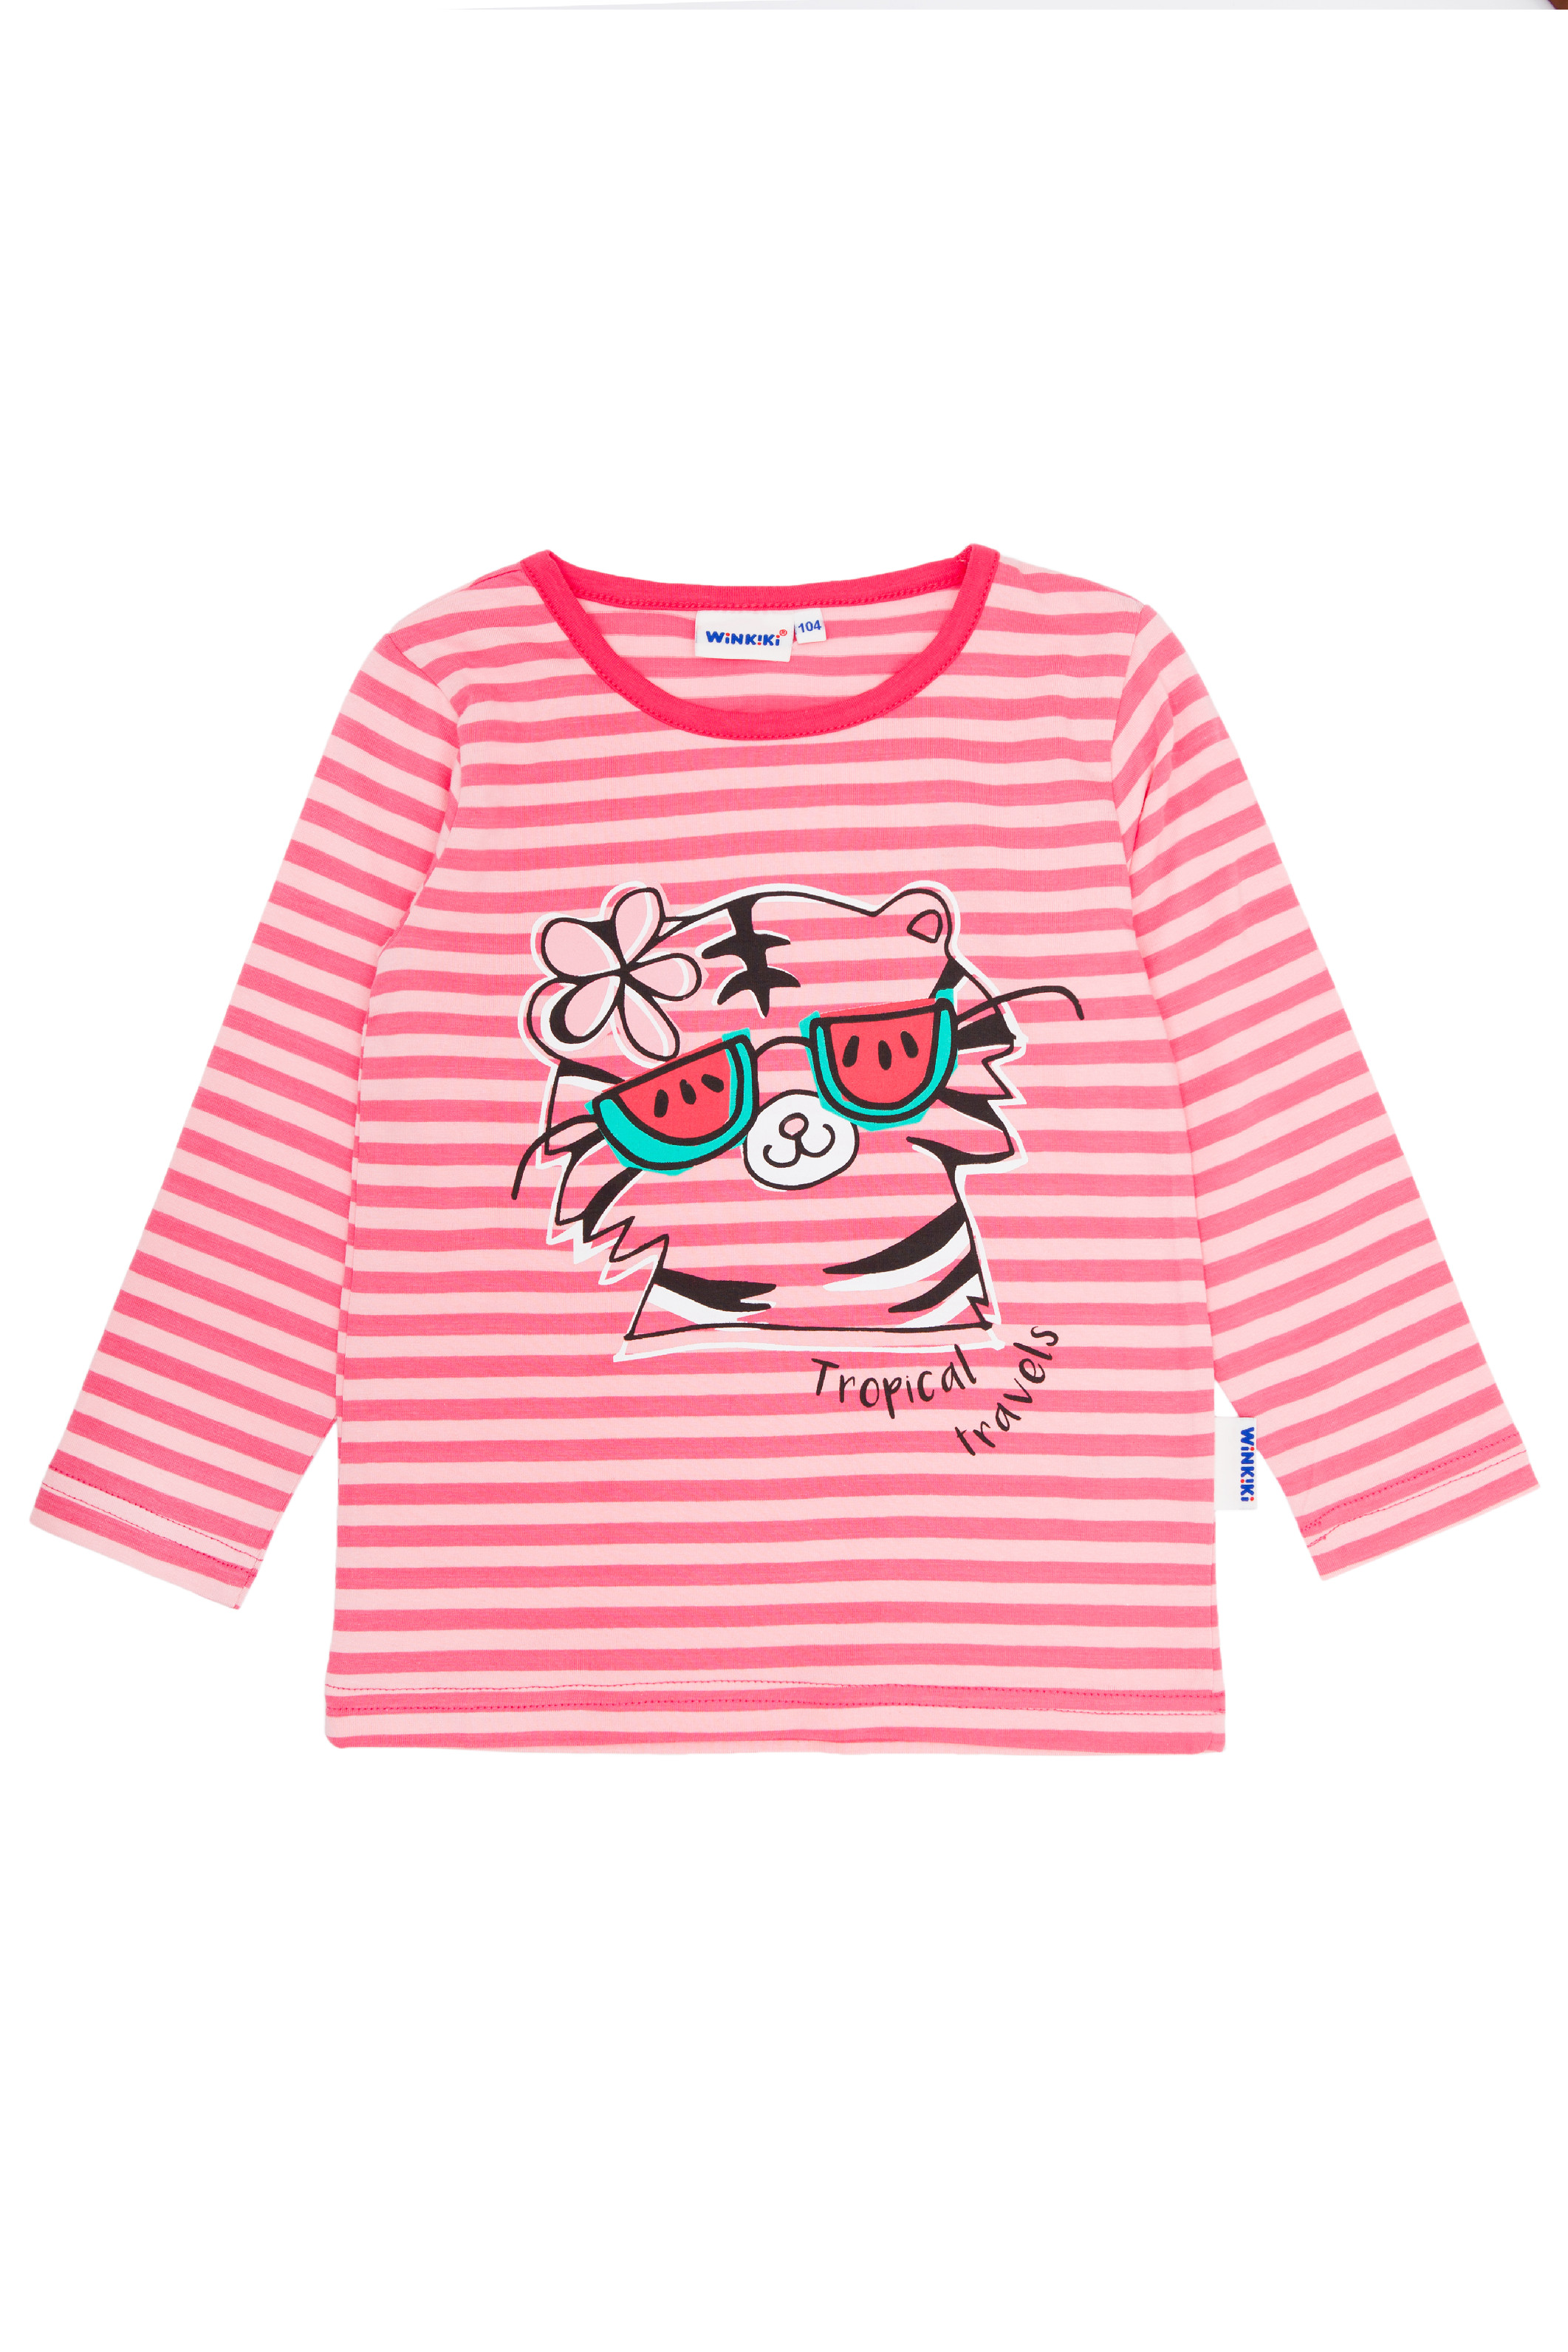 Dívčí triko - Winkiki WKG 01714, růžová Barva: Růžová, Velikost: 98